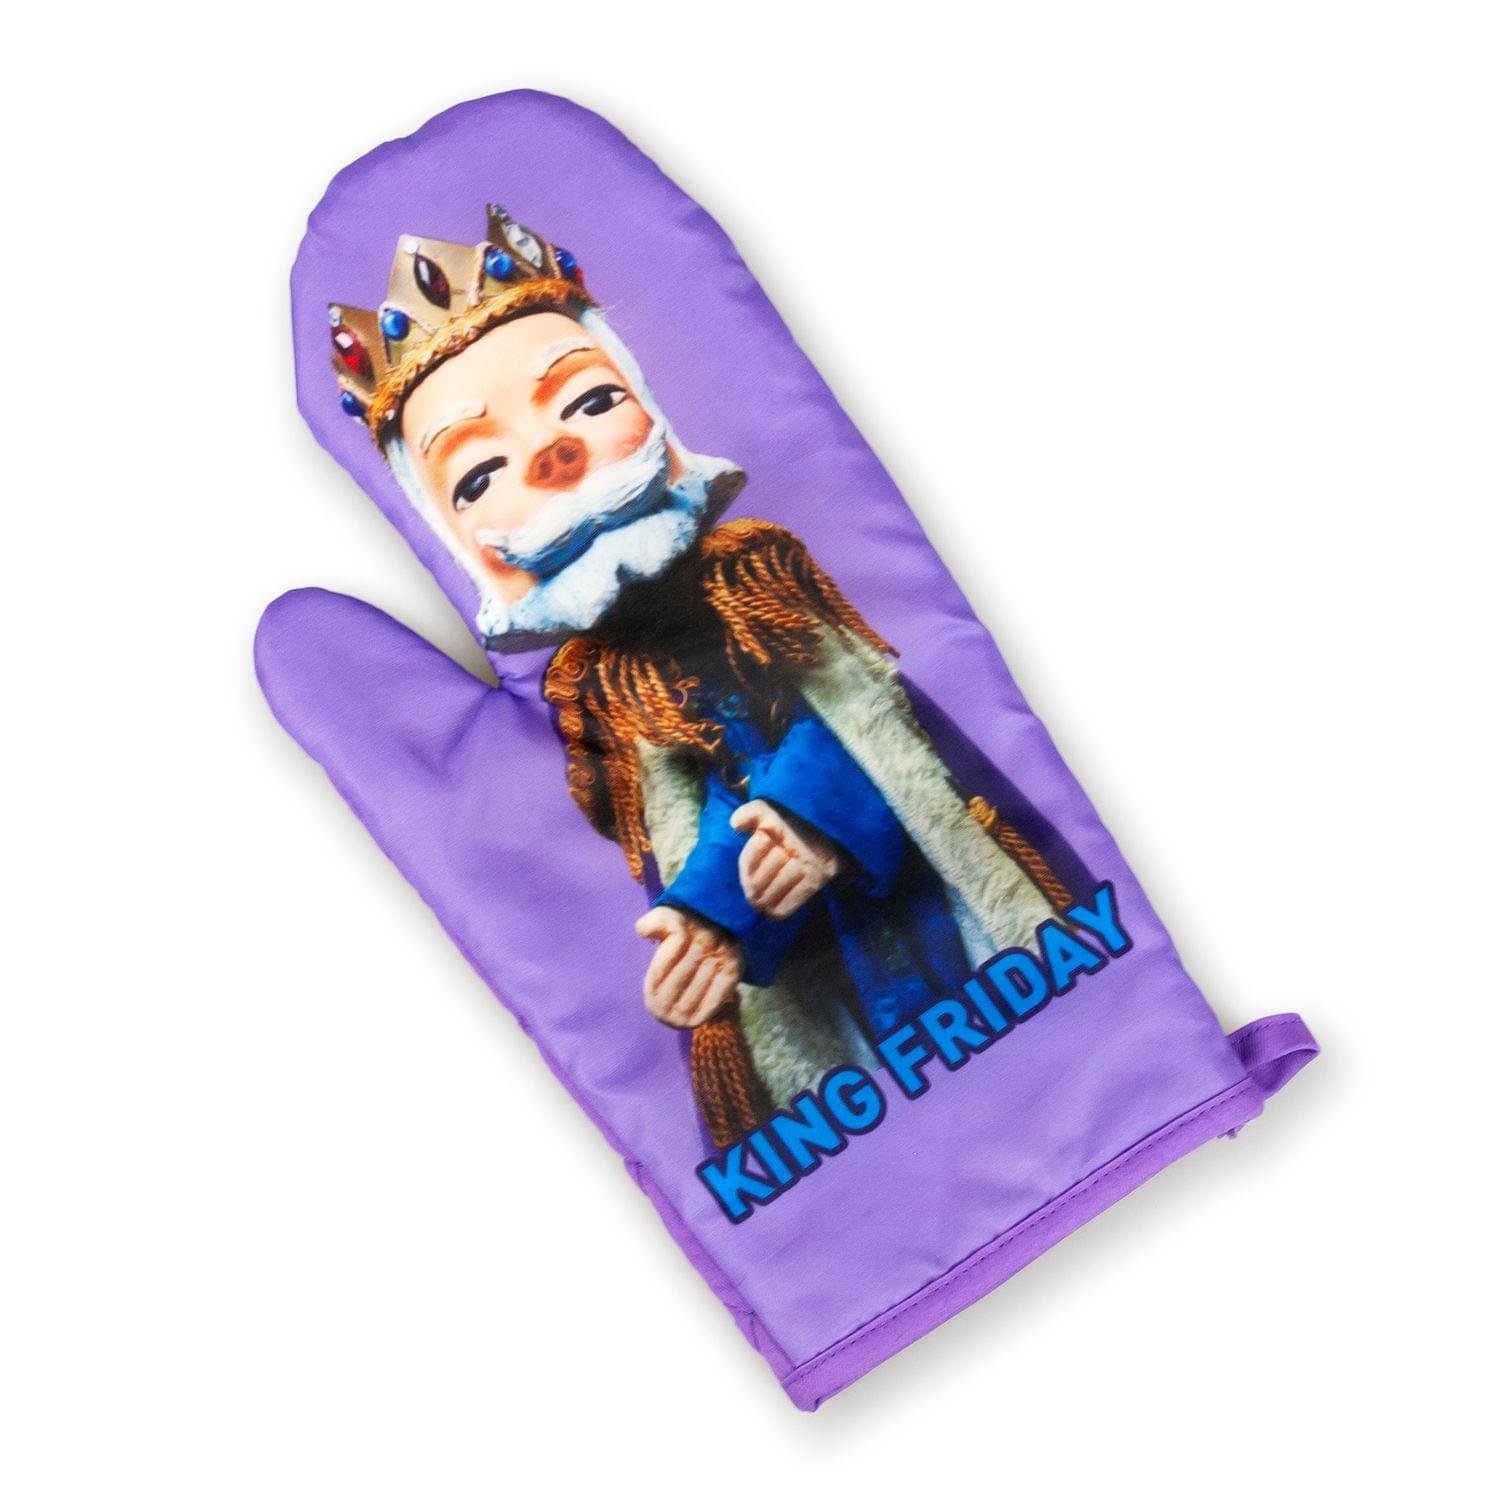 Mister Rogers Neighborhood King Friday Puppet Oven Mitt | TV Show Merchandise